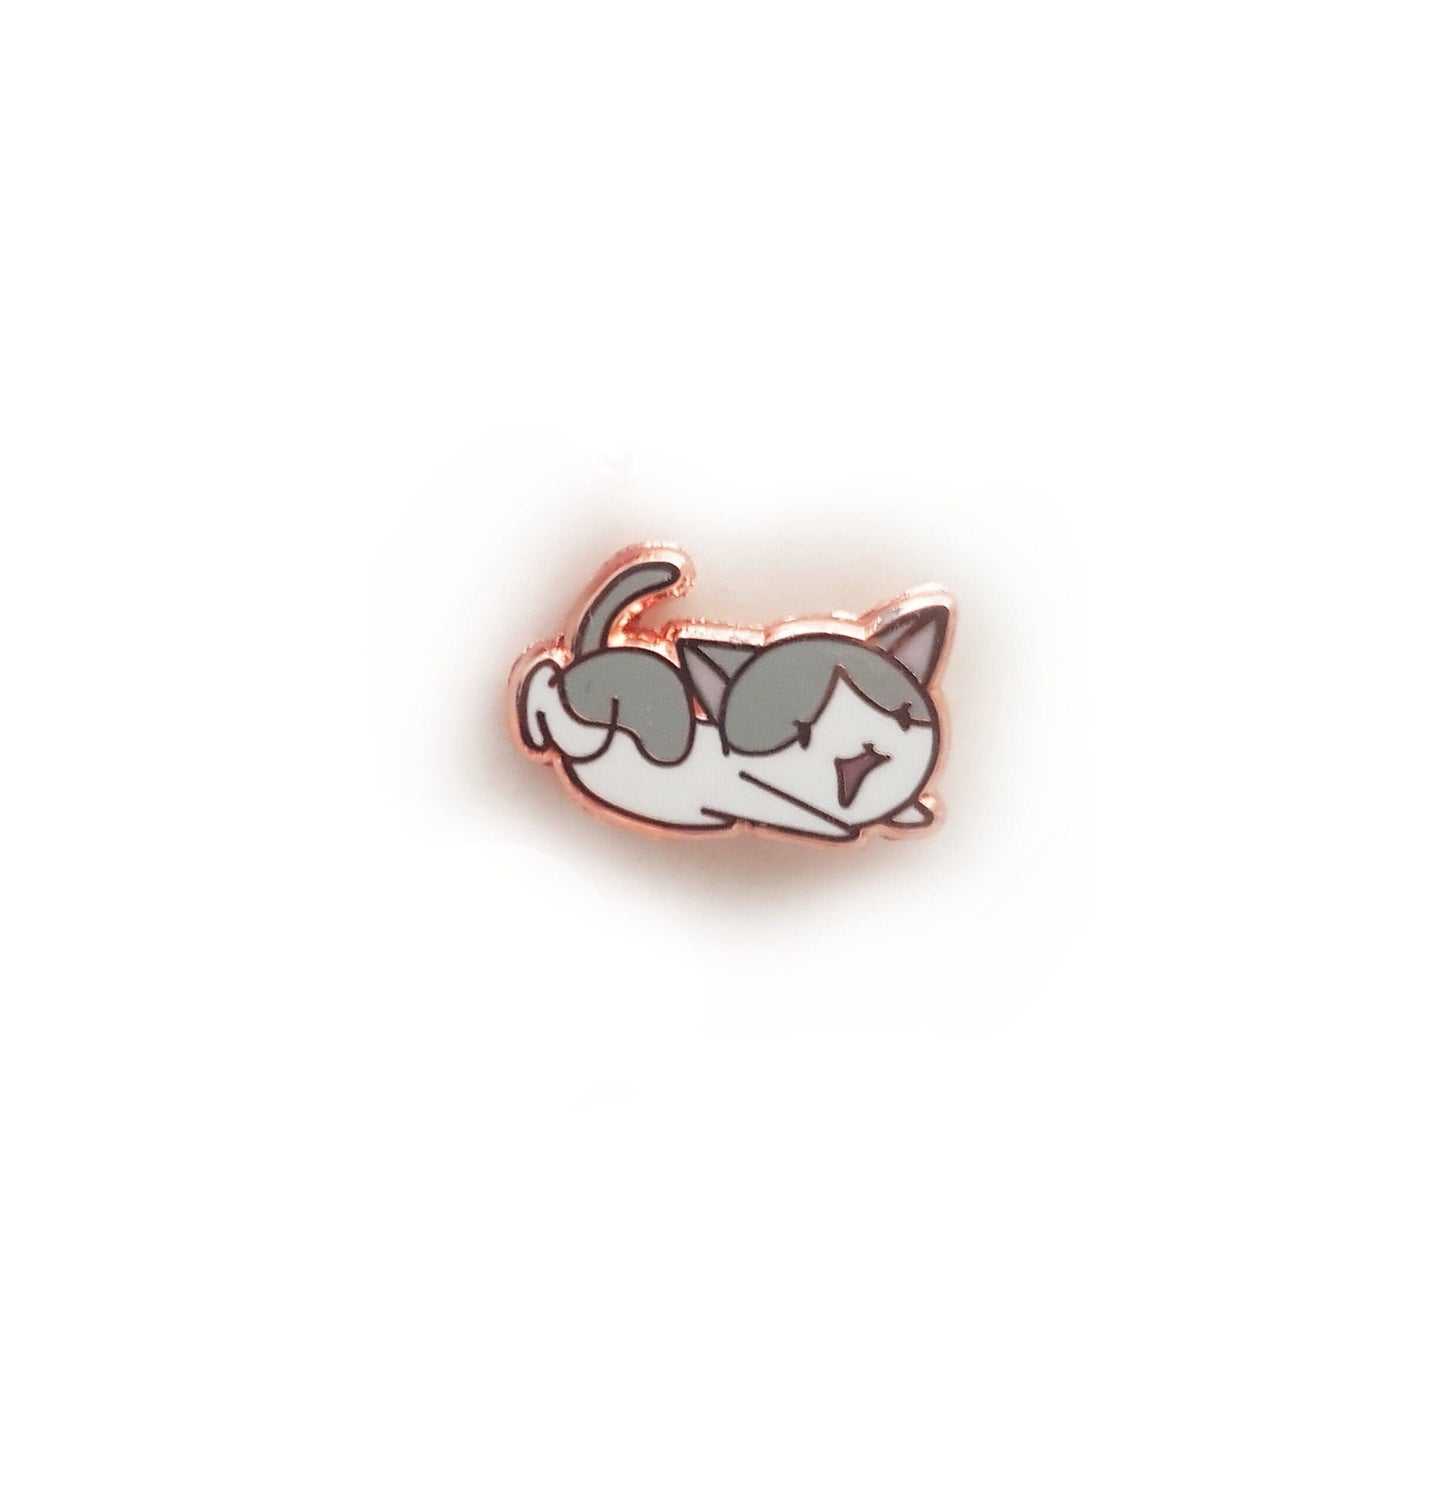 Mac the Pouncing Cat - Tiny Enamel Pin, Pins, Brooches & Lapel Pins